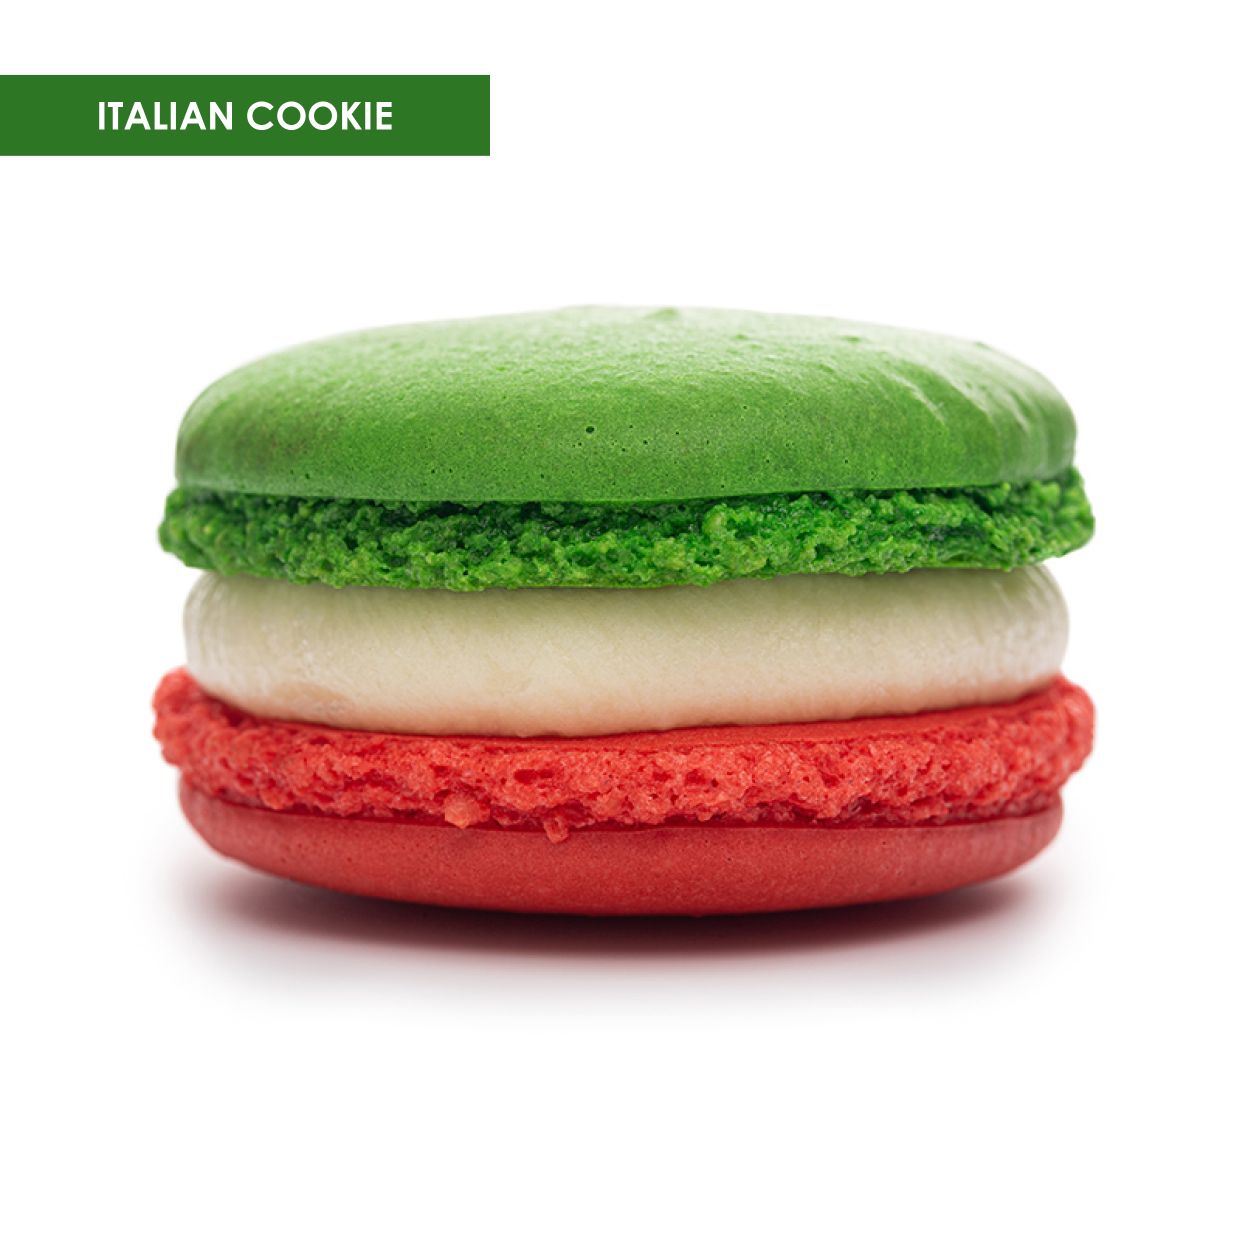 Italian Cookie Mascarpone